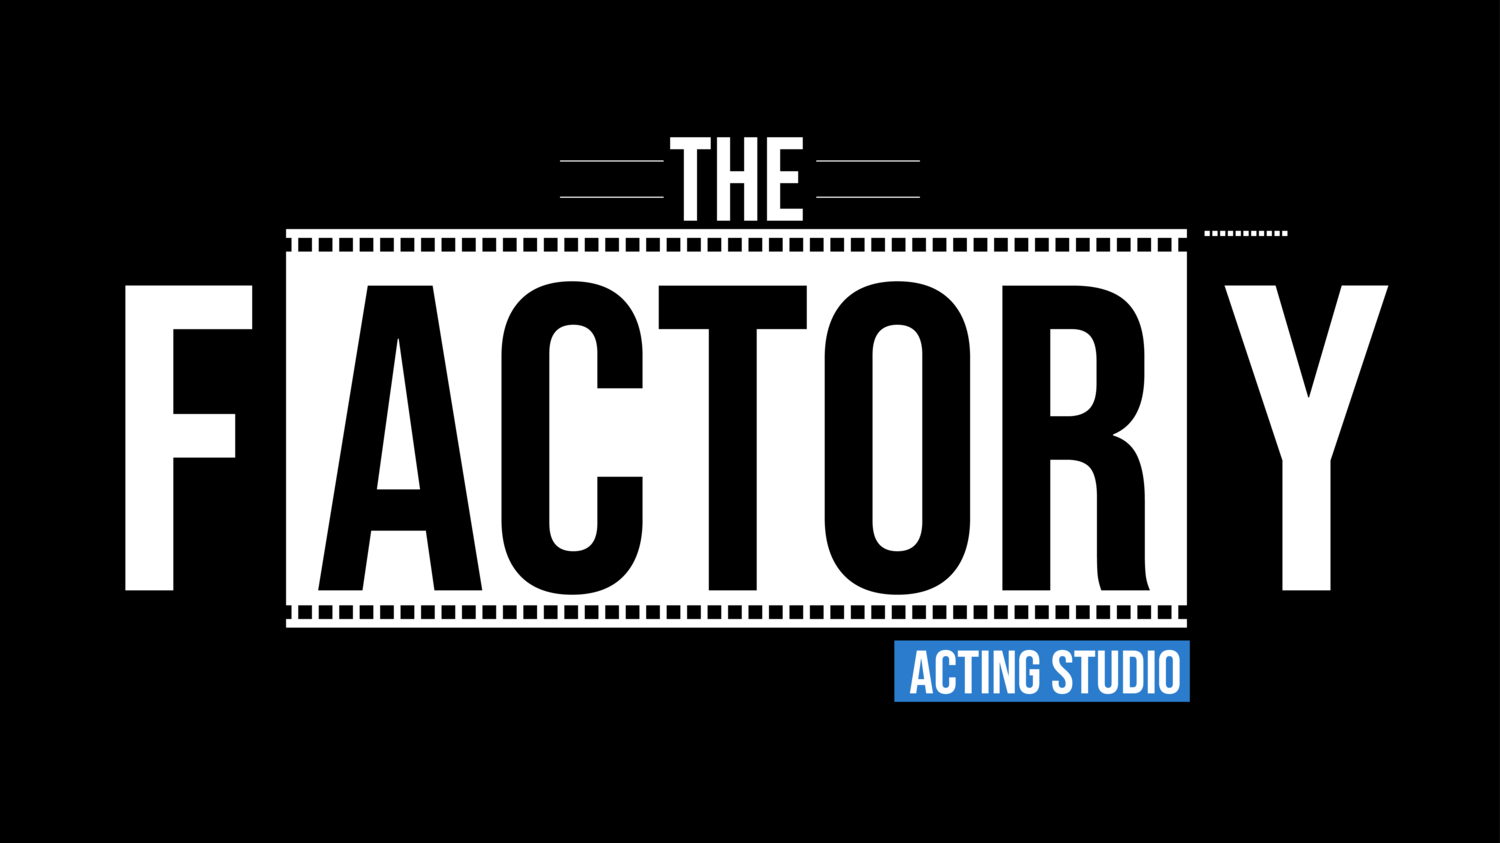 The Factory Acting Studio